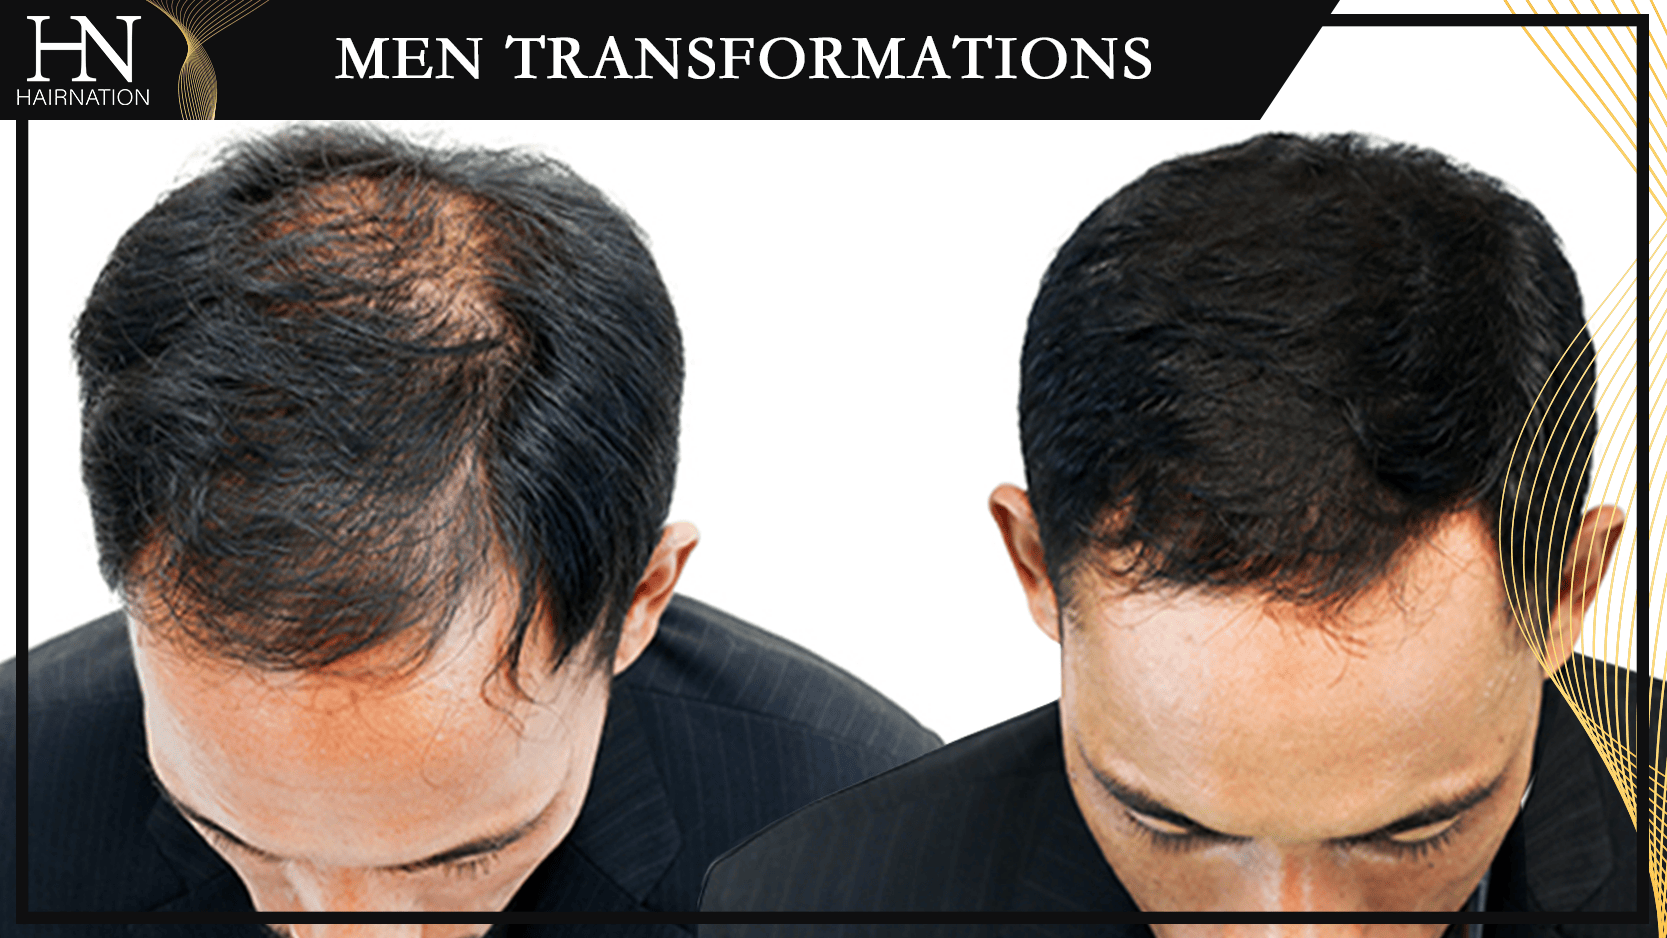 Men's Transformations